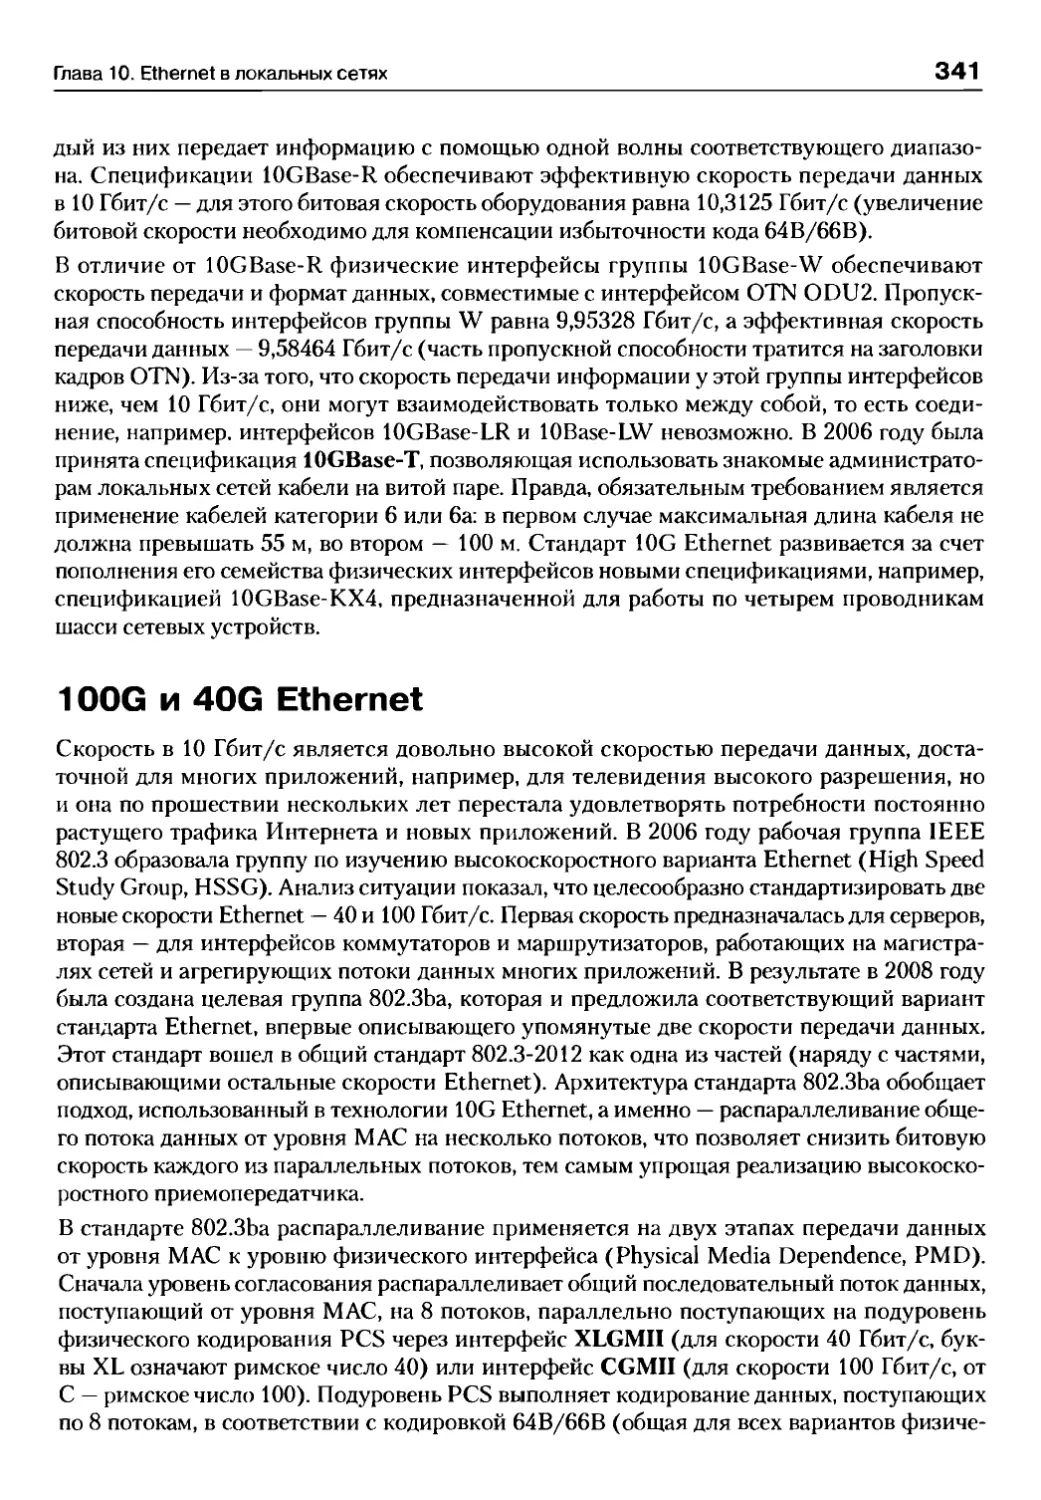 100G и 40G Ethernet